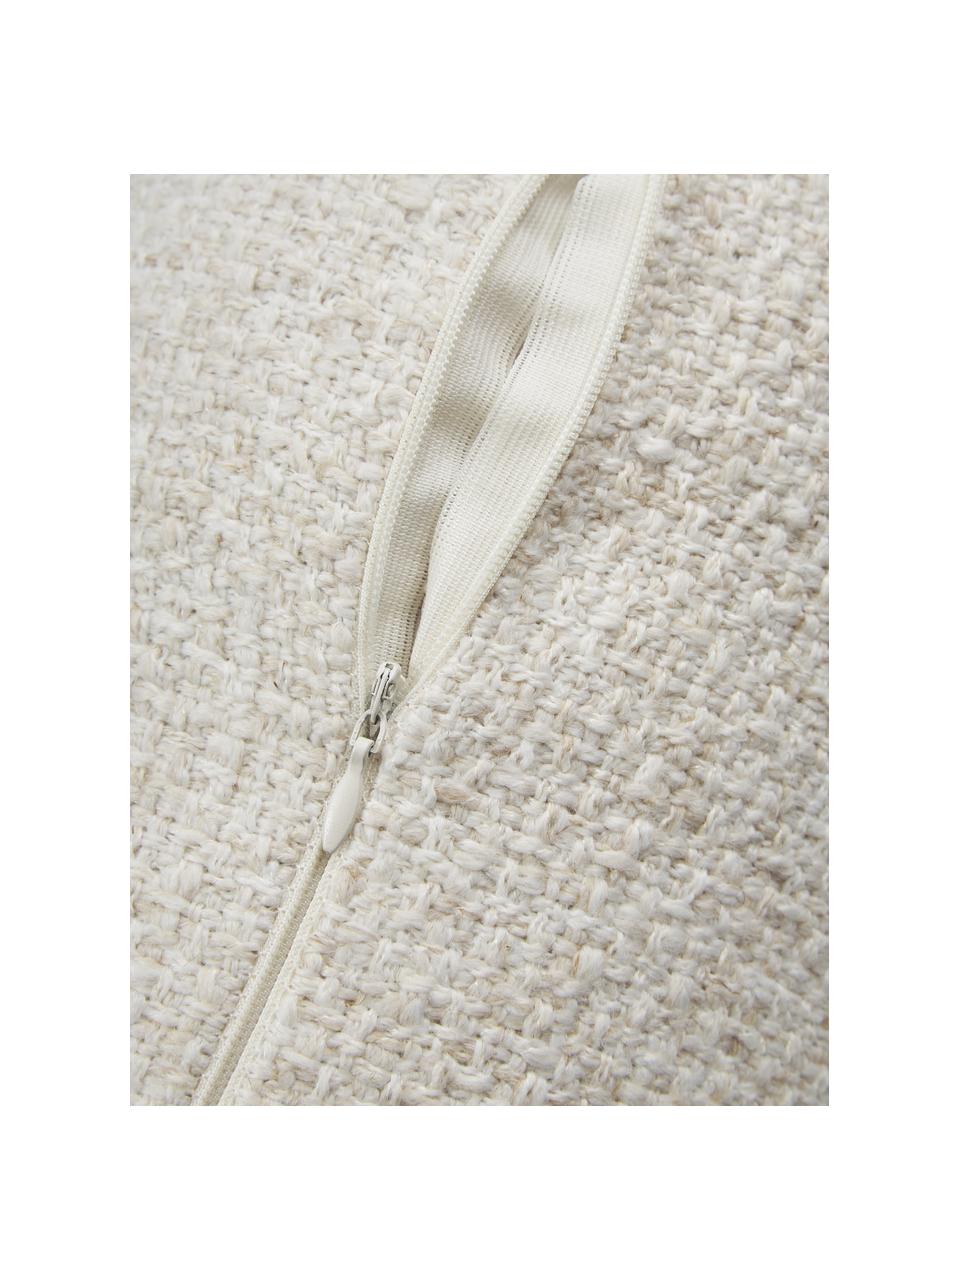 Traversin en tissu bouclé avec bordure passepoilée Aya, Blanc crème, Ø 17 x long. 45 cm